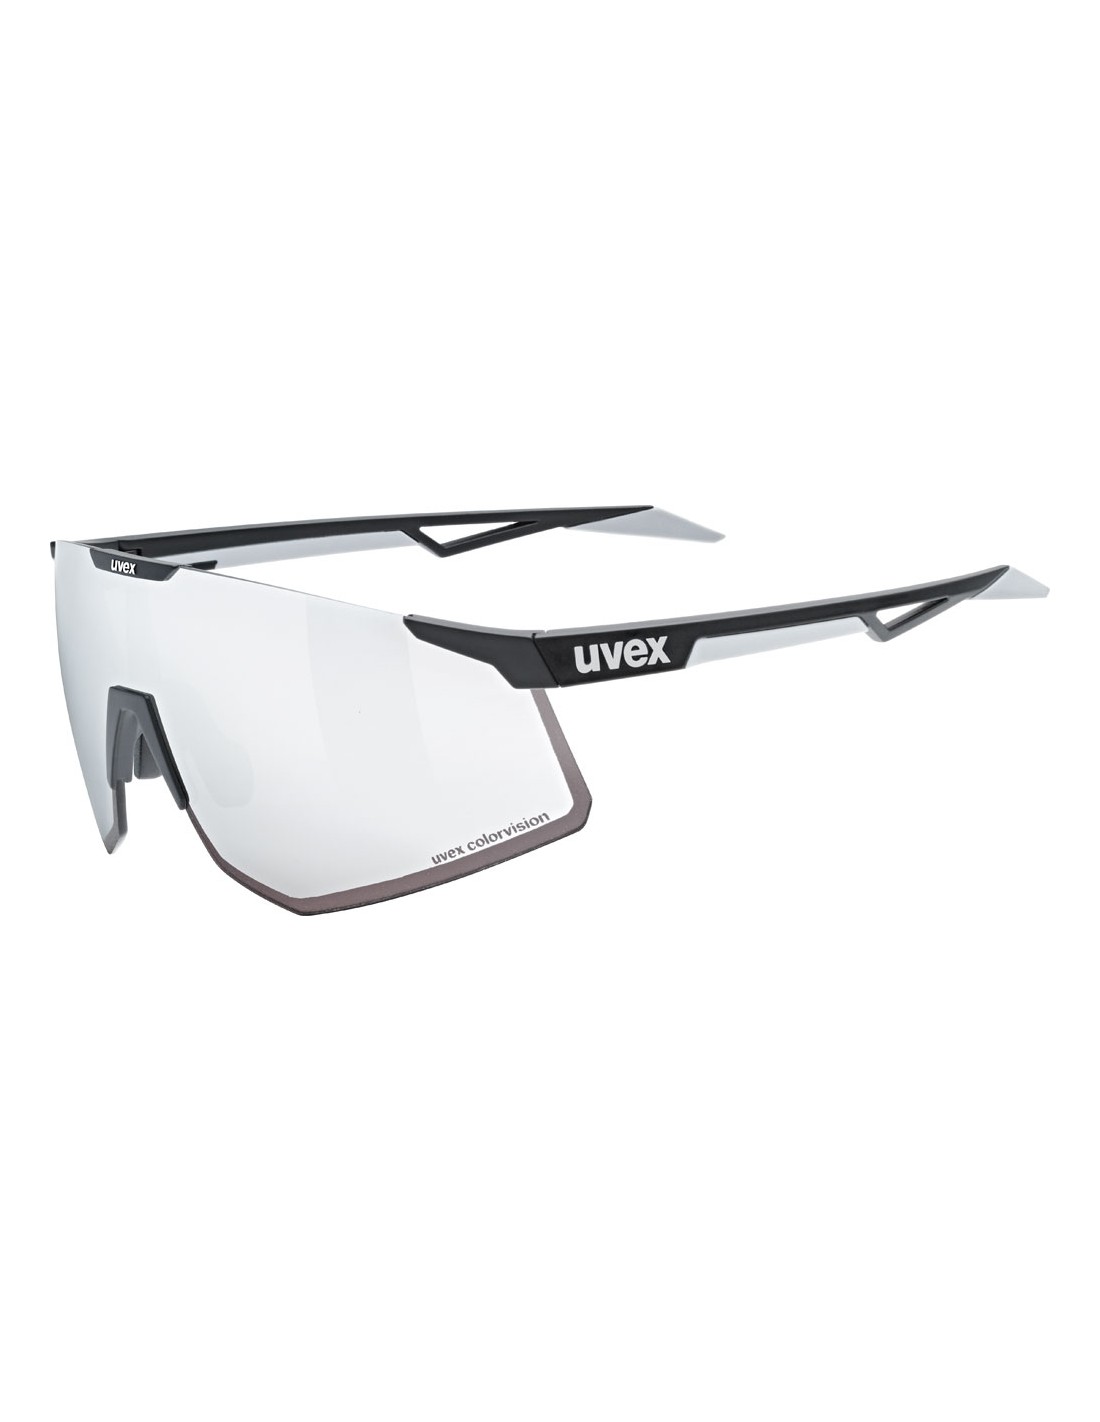 Uvex Sportbrille Pace Perform CV, black matt, uvex colorvision mirror silver Cat. 3 serious silver von Uvex